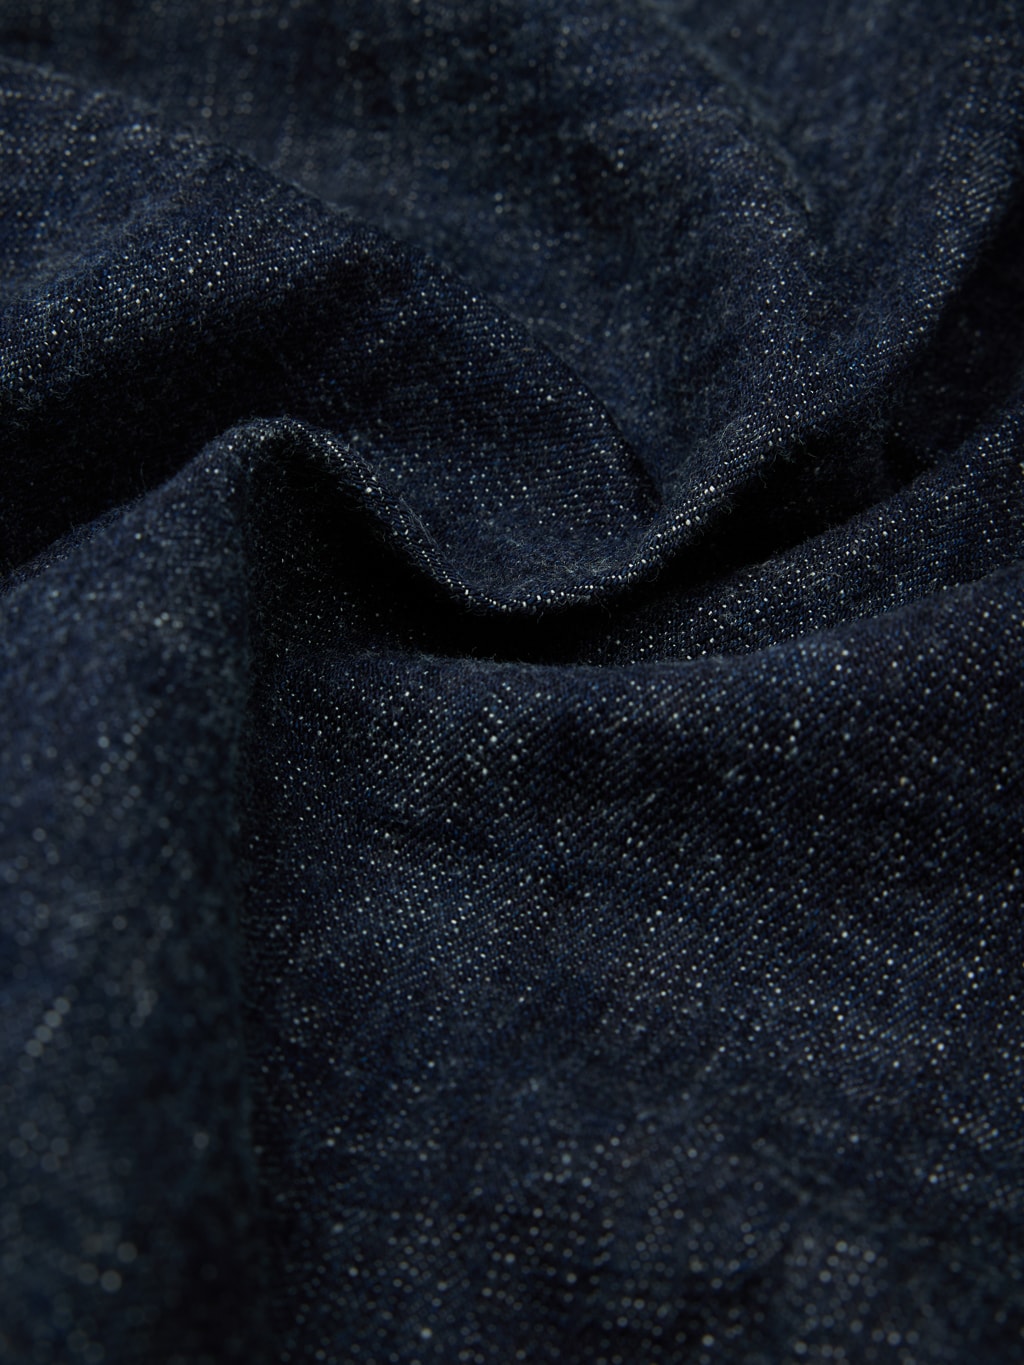 Fob factory Type III denim jacket selvedge cotton fabric texture